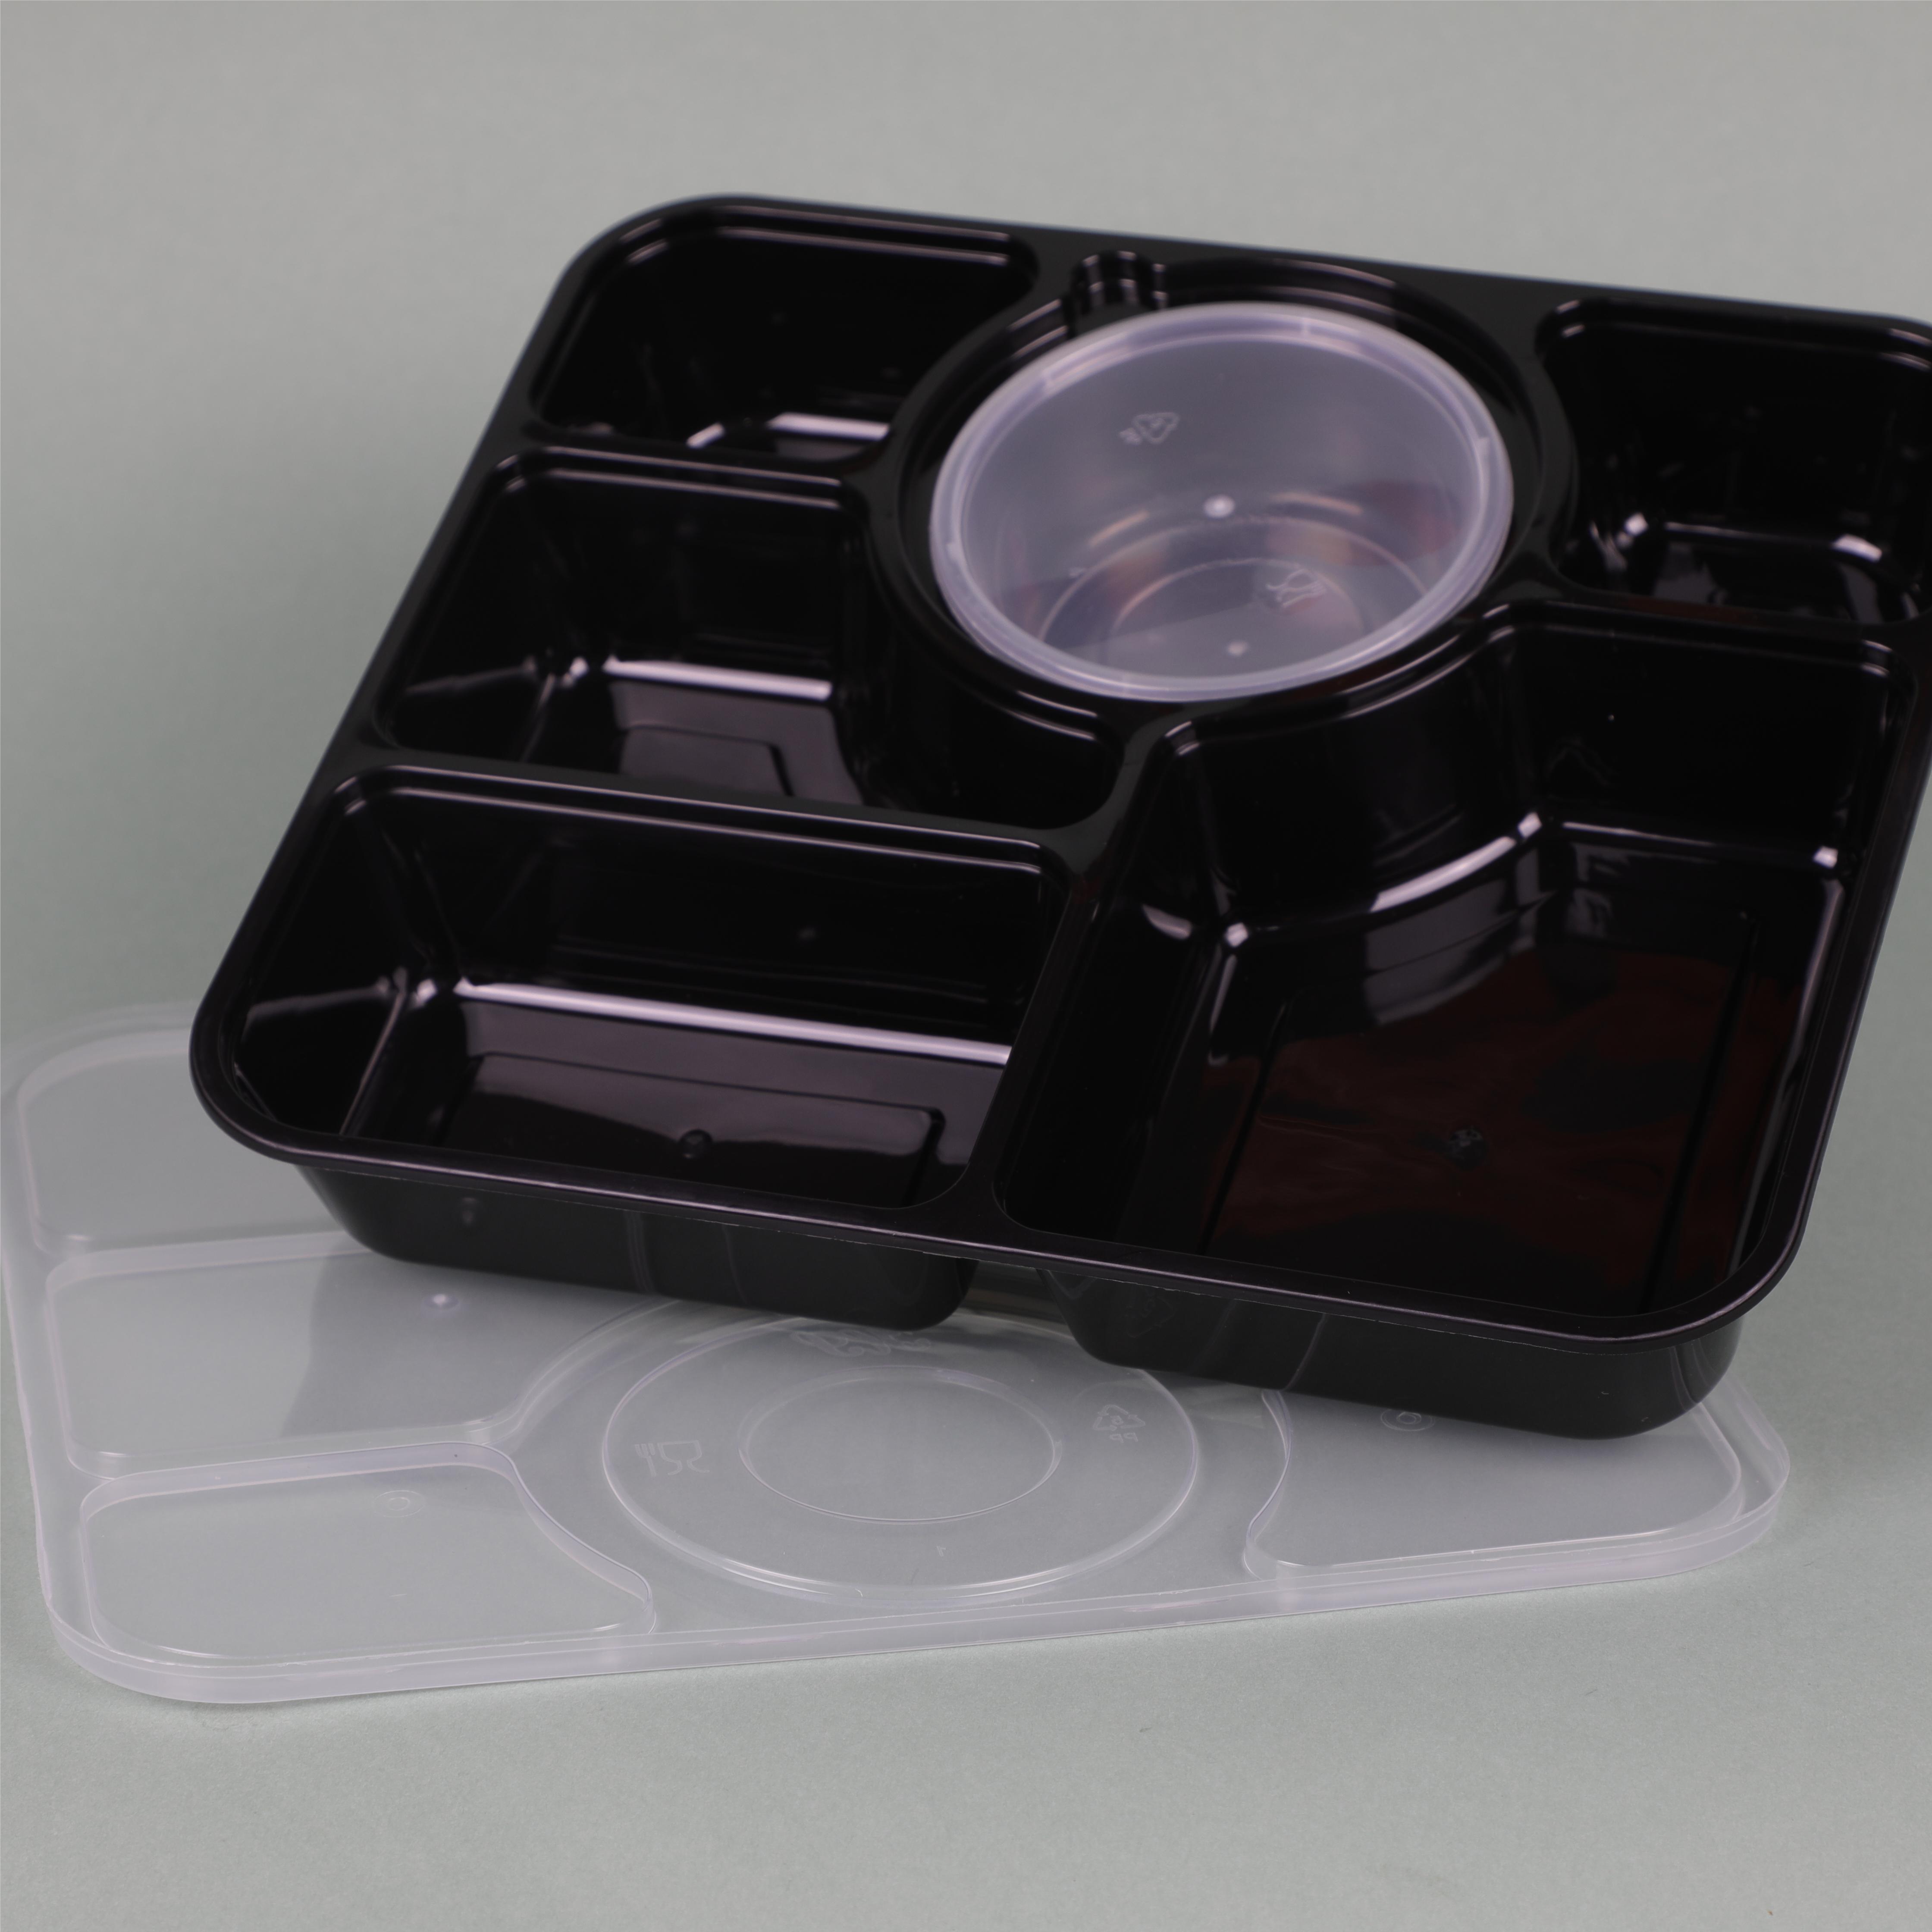 Одноразовая биоразлагаемая коробка для еды PLA Lunch Box-wallis